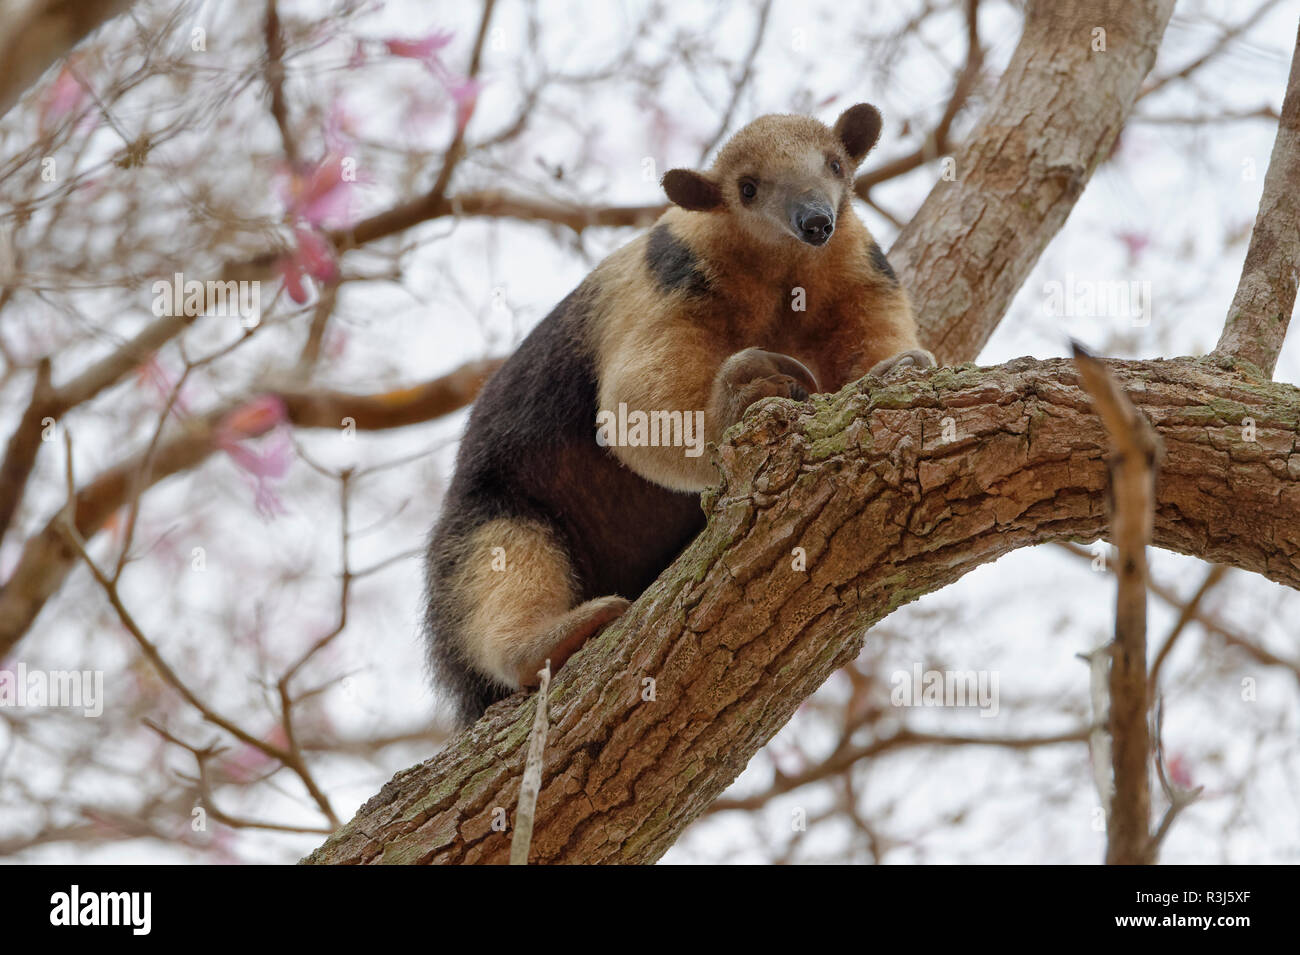 Southern tamandua (Tamandua tetradactyla) climbing on a tree, Pantanal, Mato Grosso, Brazil Stock Photo